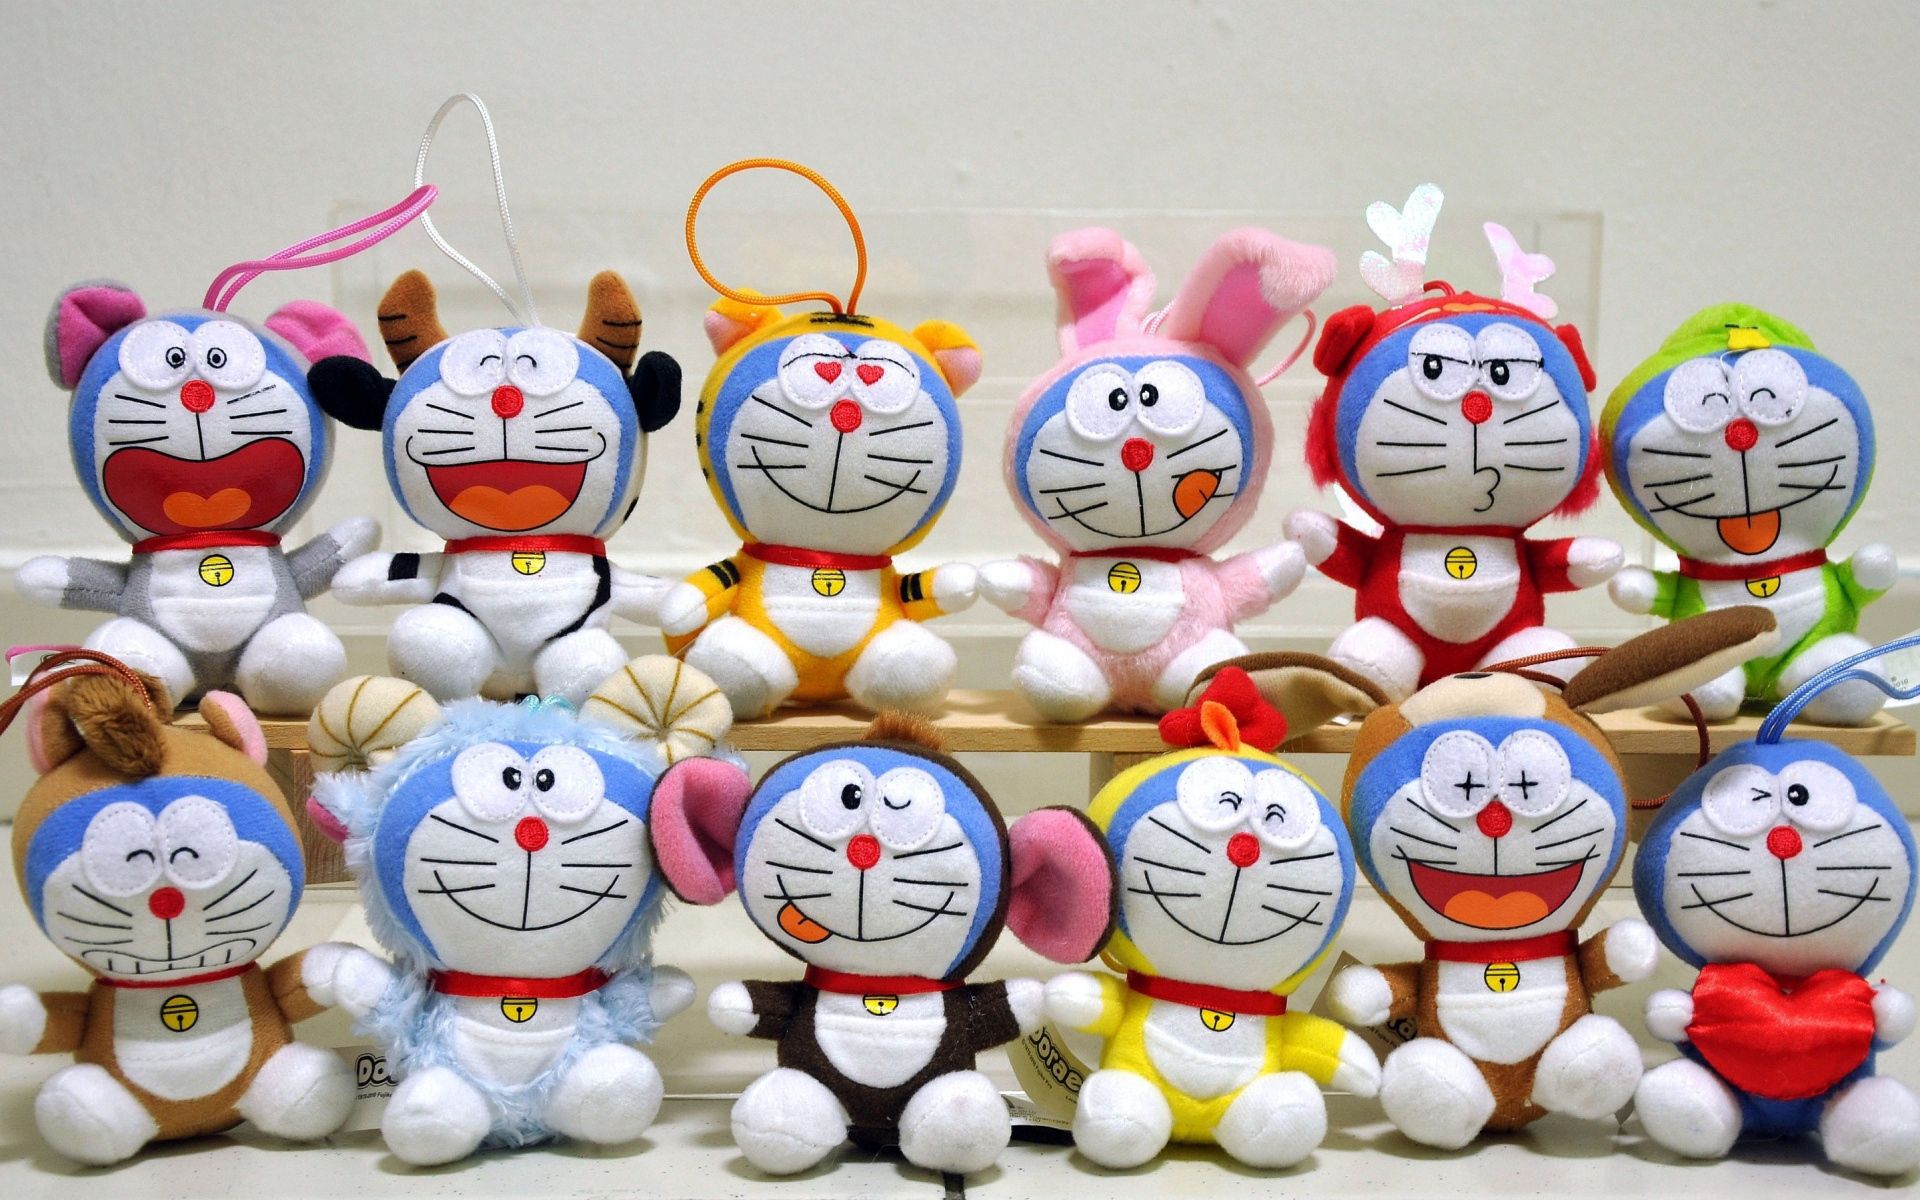 hares, miscellanea, miscellaneous, kittens Toys Cellphone FHD pic